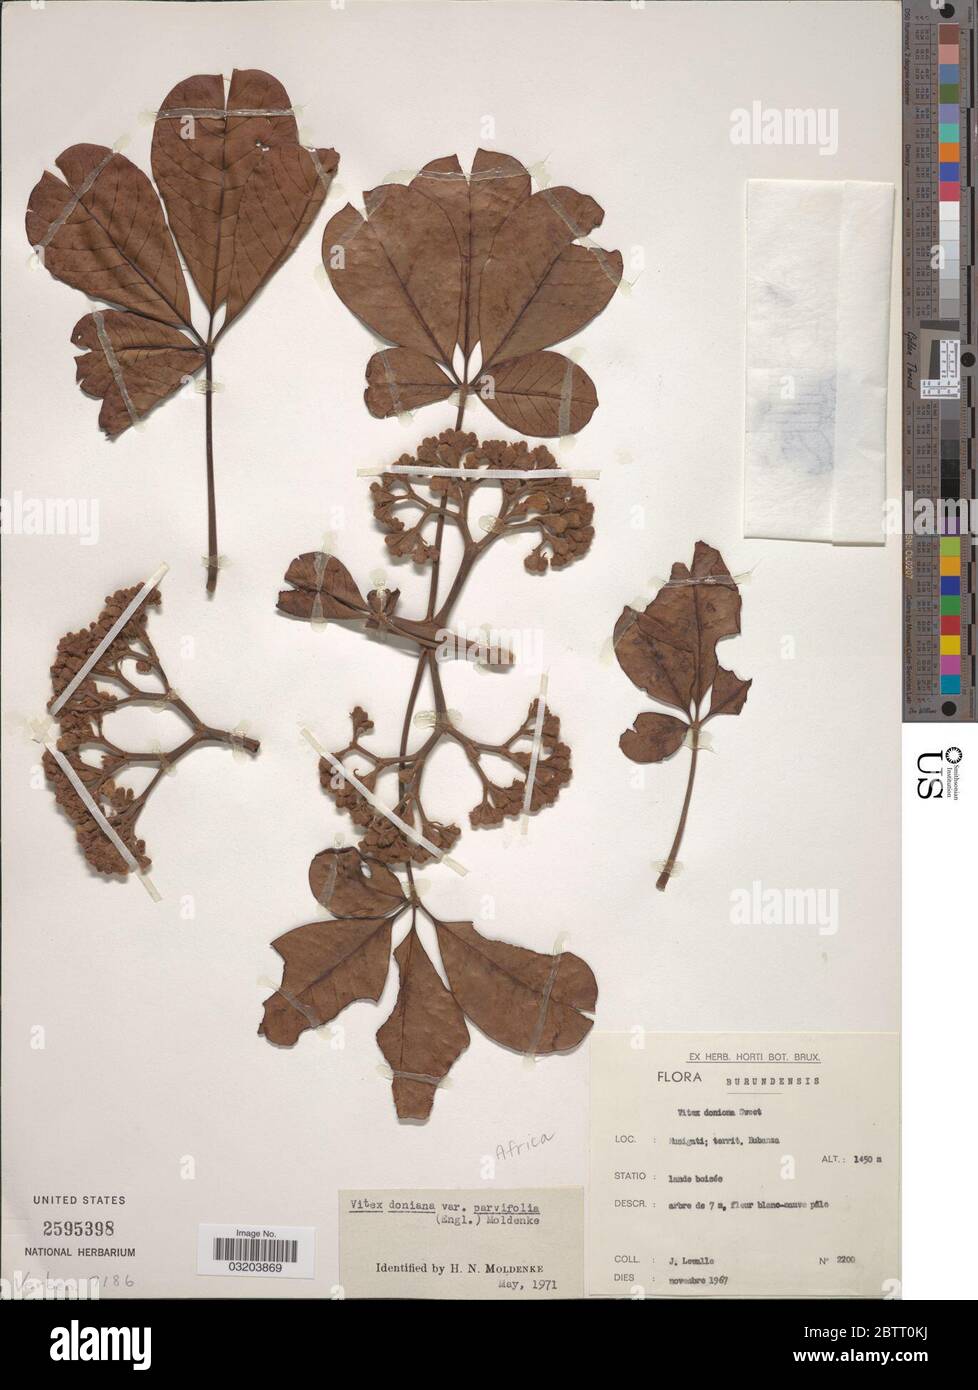 Citharexylum doniana var parvifolia. Stock Photo